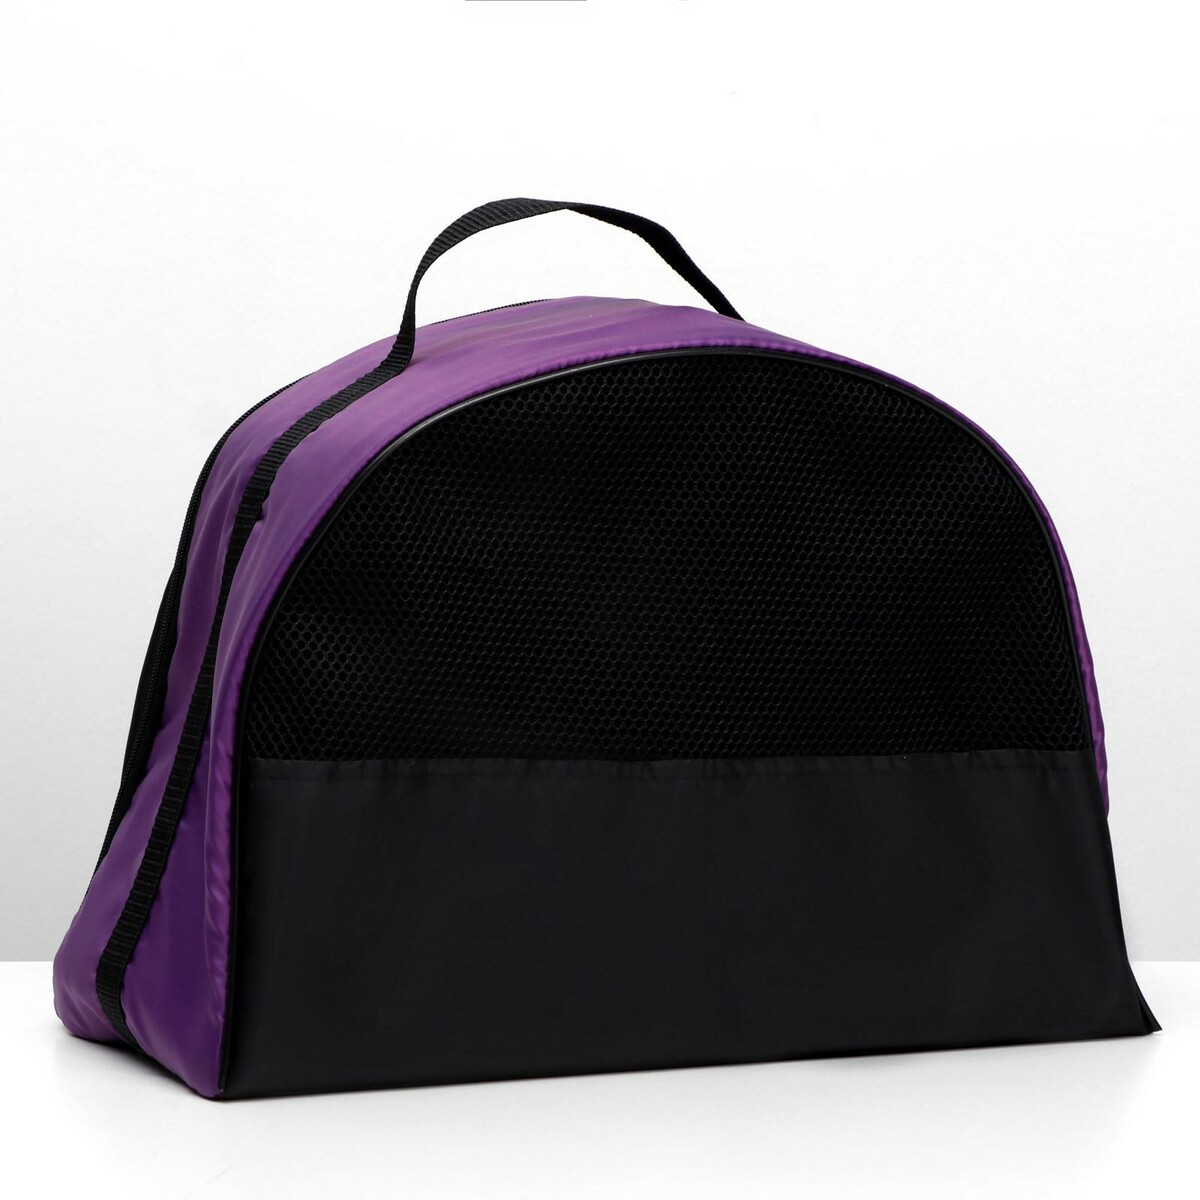 Сумка - переноска для животных, оксфорд, 42 х 22 х 29 см, фиолетовая сумка переноска для животных искусственная кожа 31 х 20 5 х 22 см